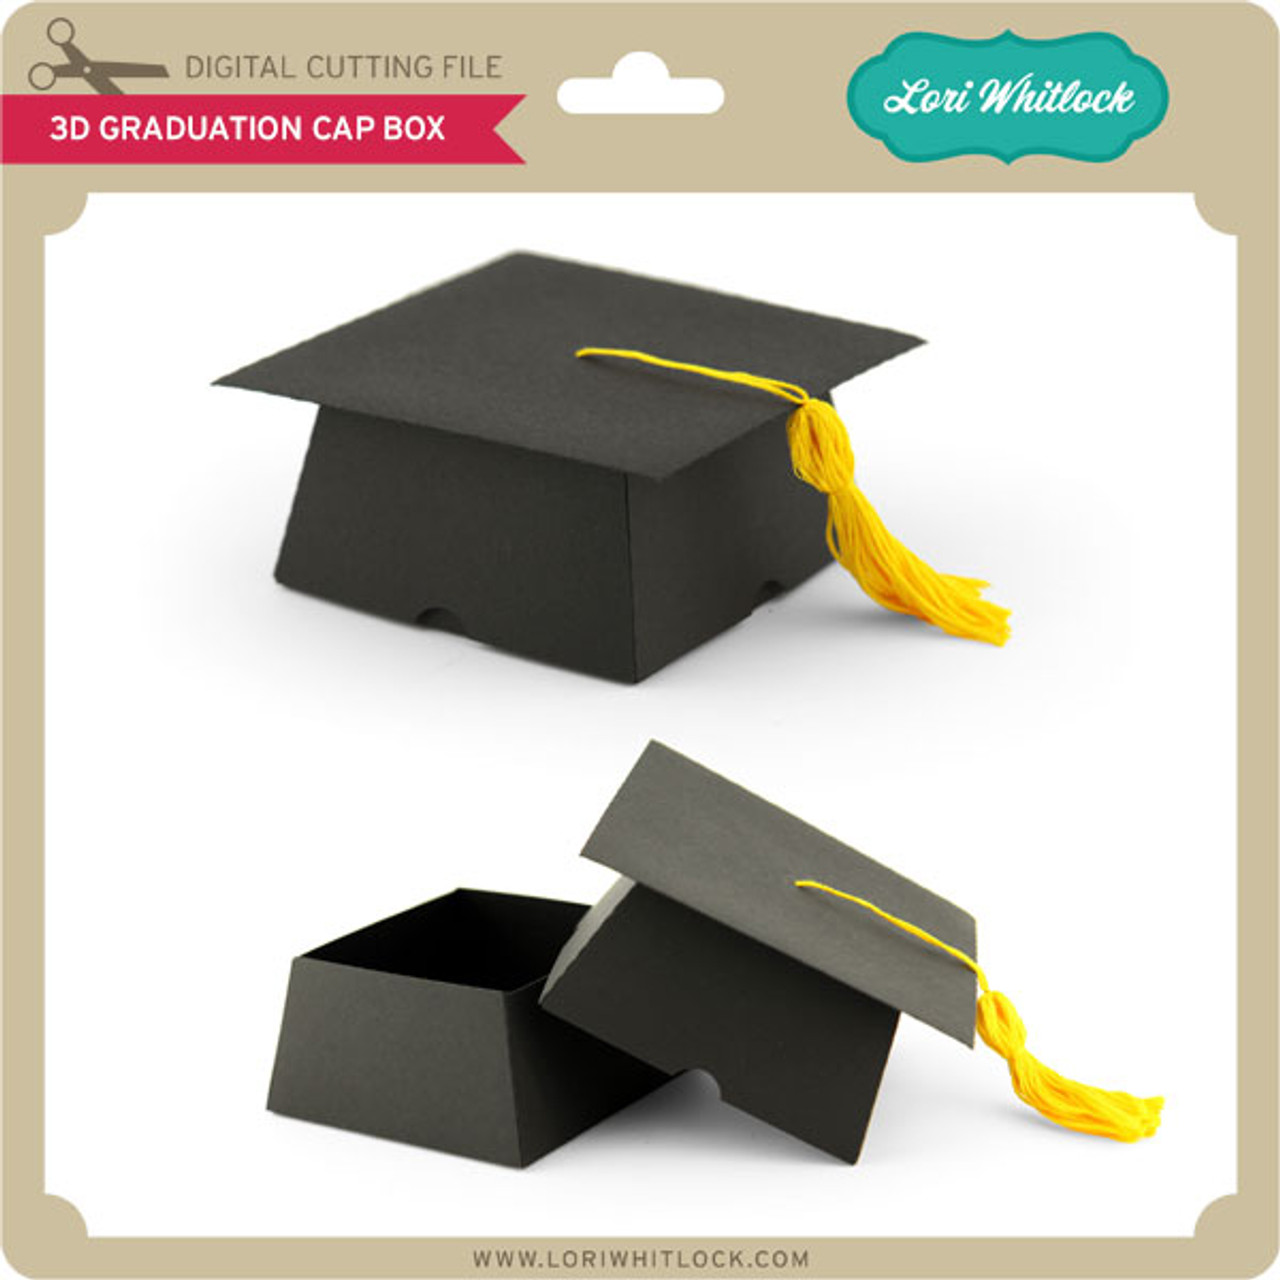 How to Make a Graduation Cap Gift Box using Cricut 